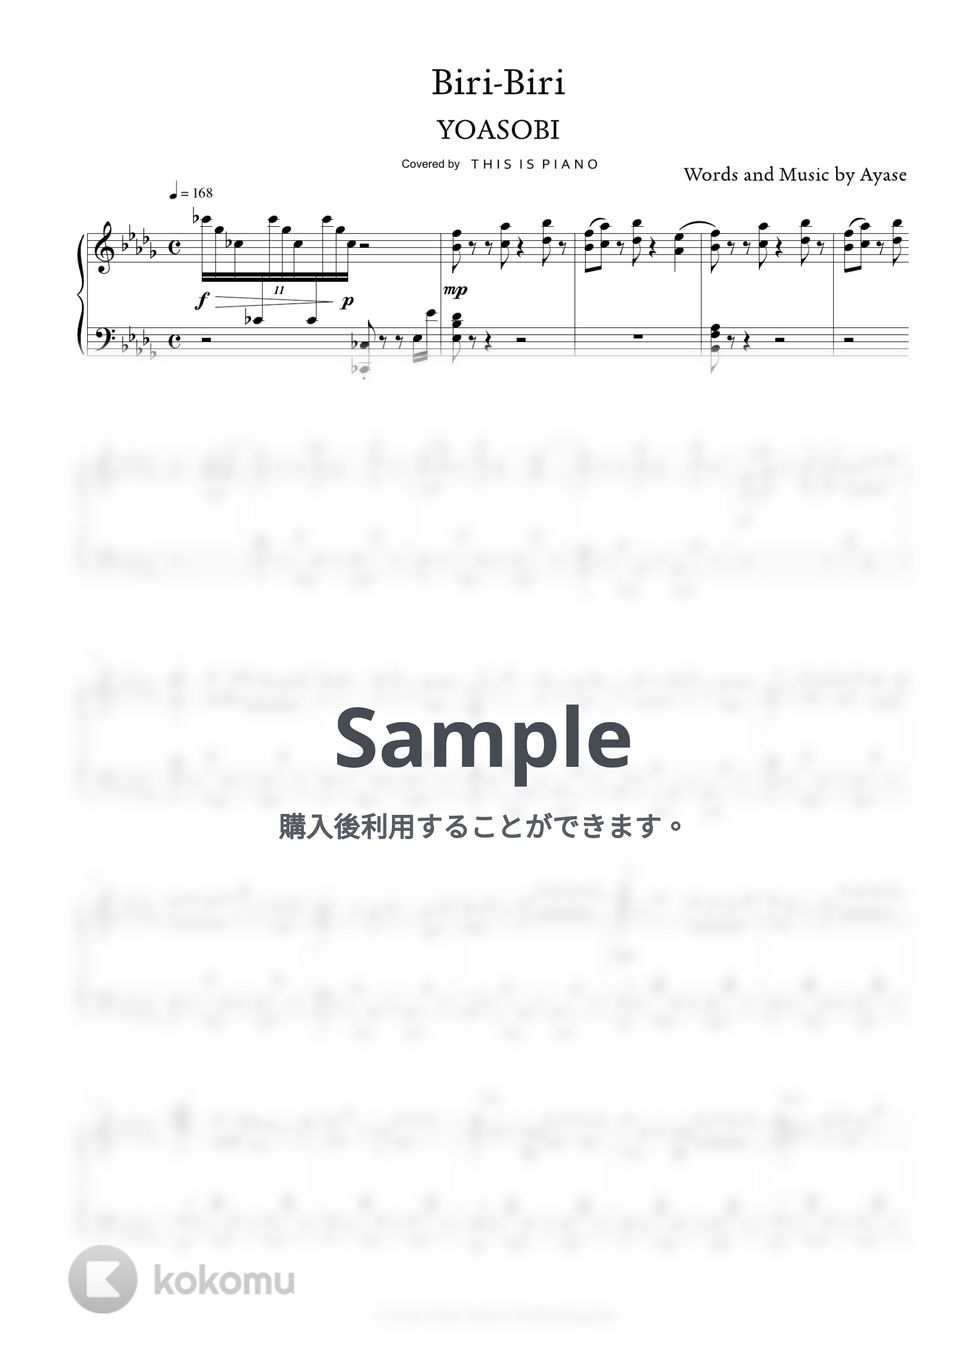 YOASOBI - Biri-Biri by THIS IS PIANO